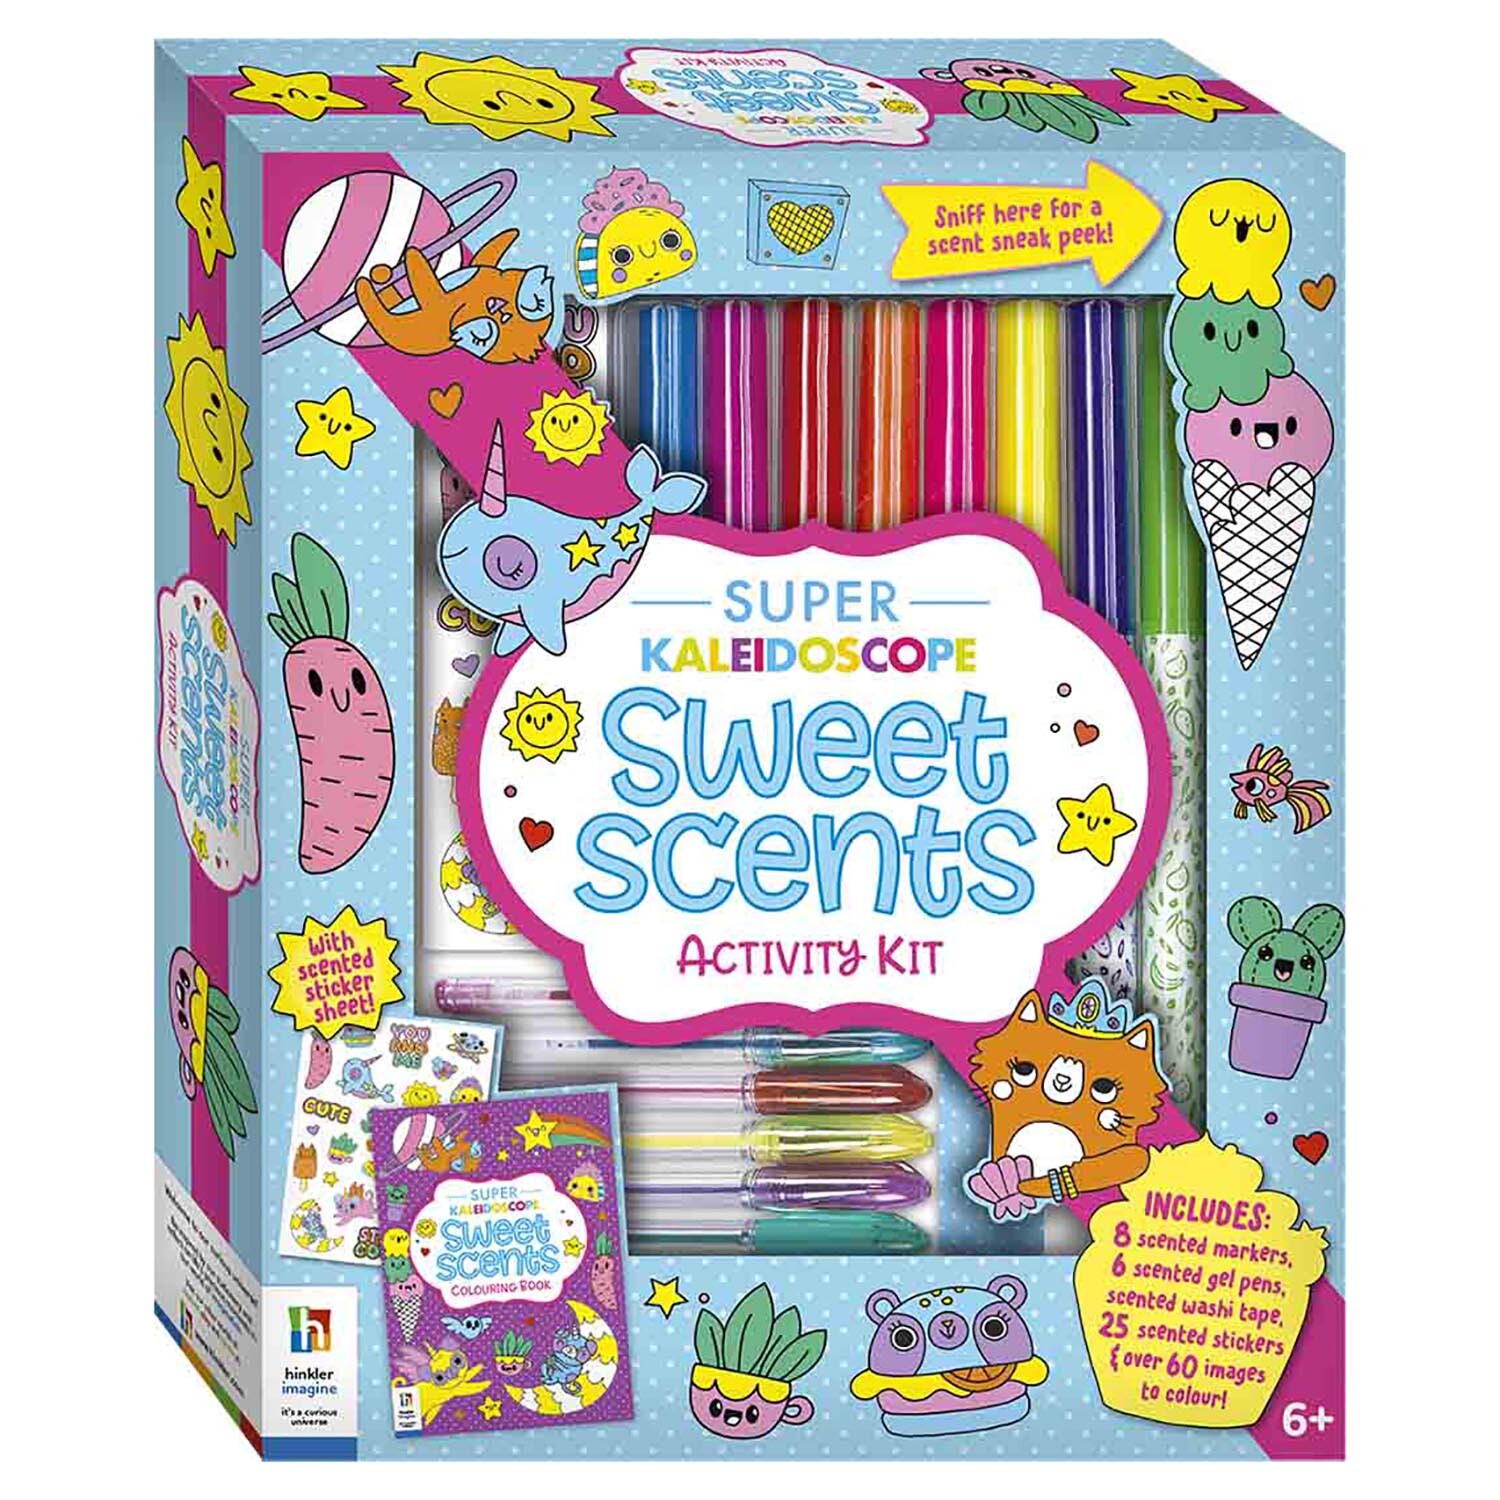 Hinkler Super Kaleidoscope Sweet Scents Activity Kit Image 1